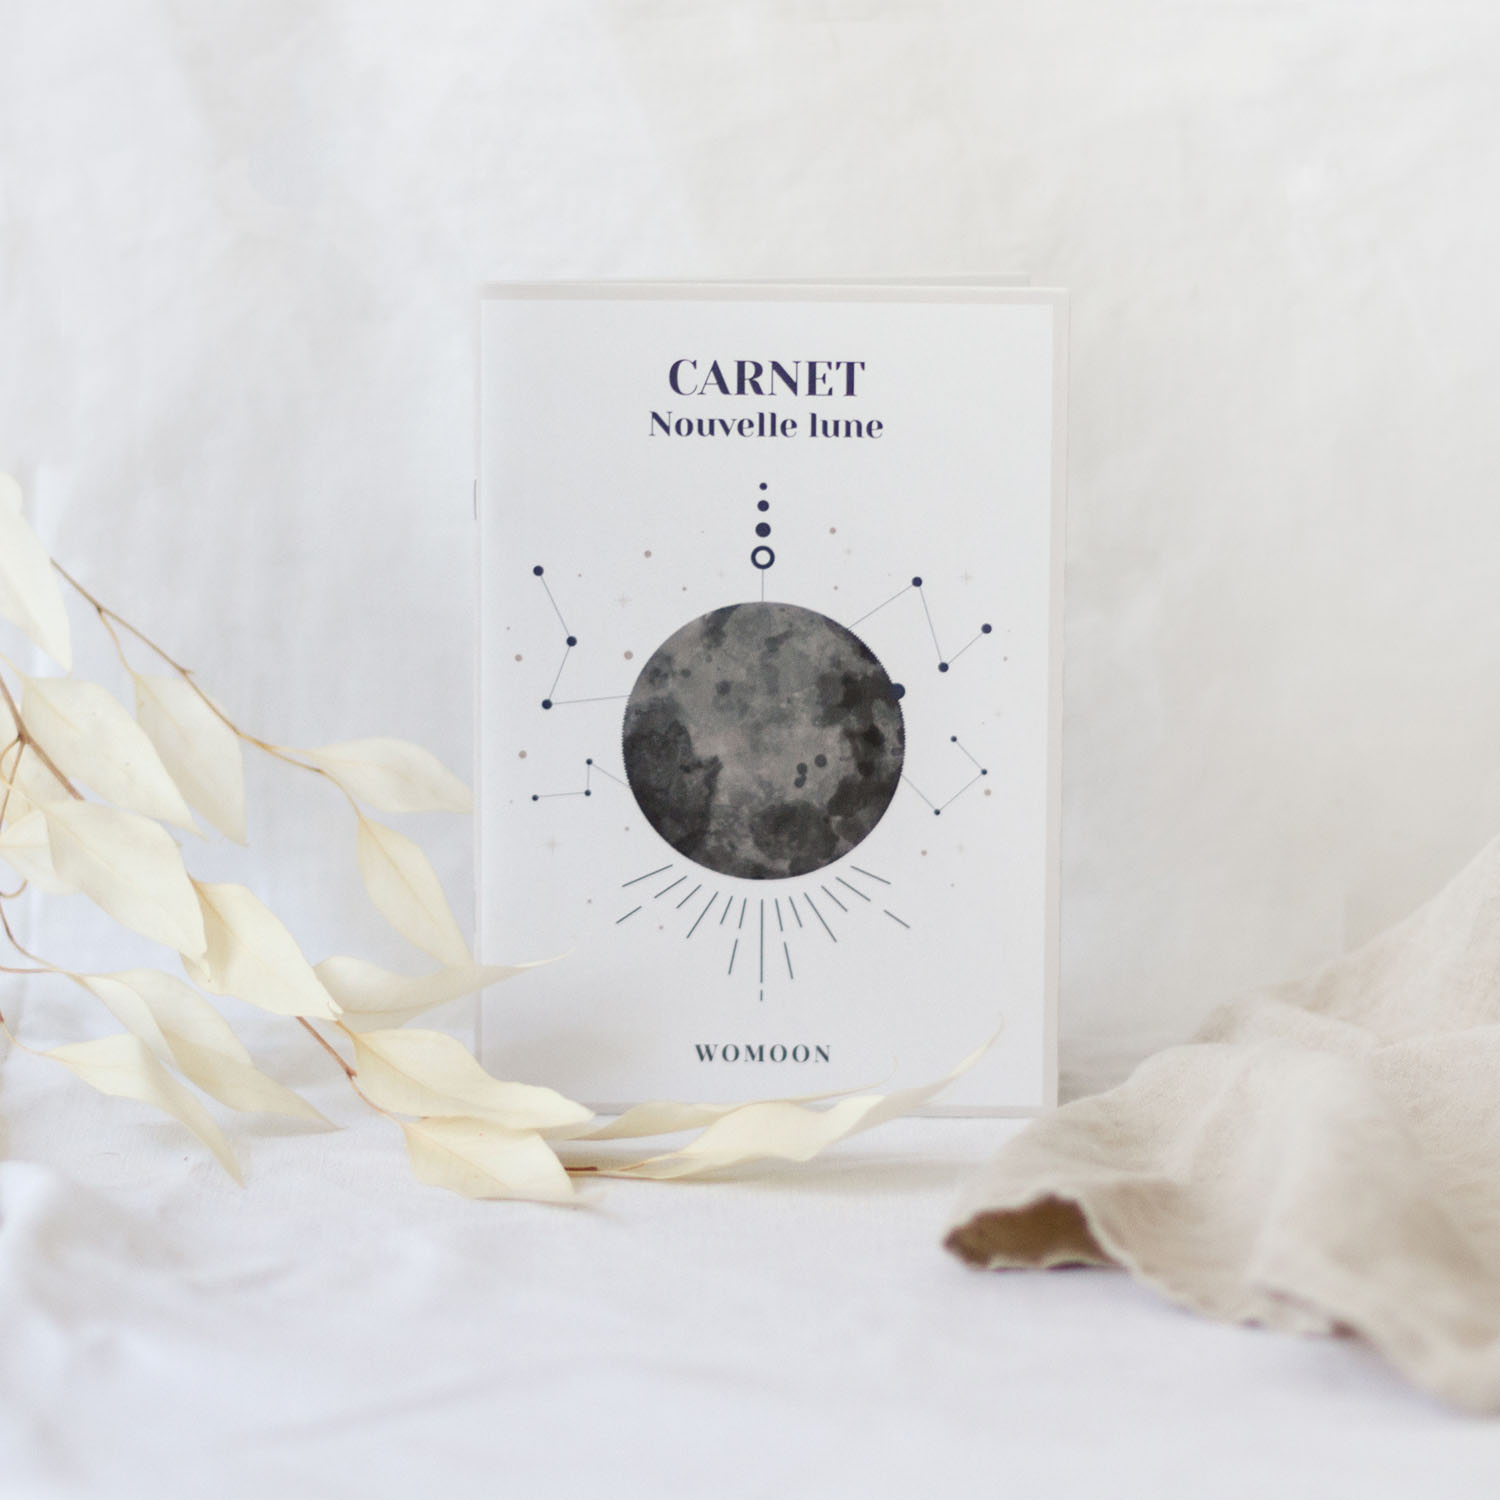 Carnet de gratitude by Rituel de Lune